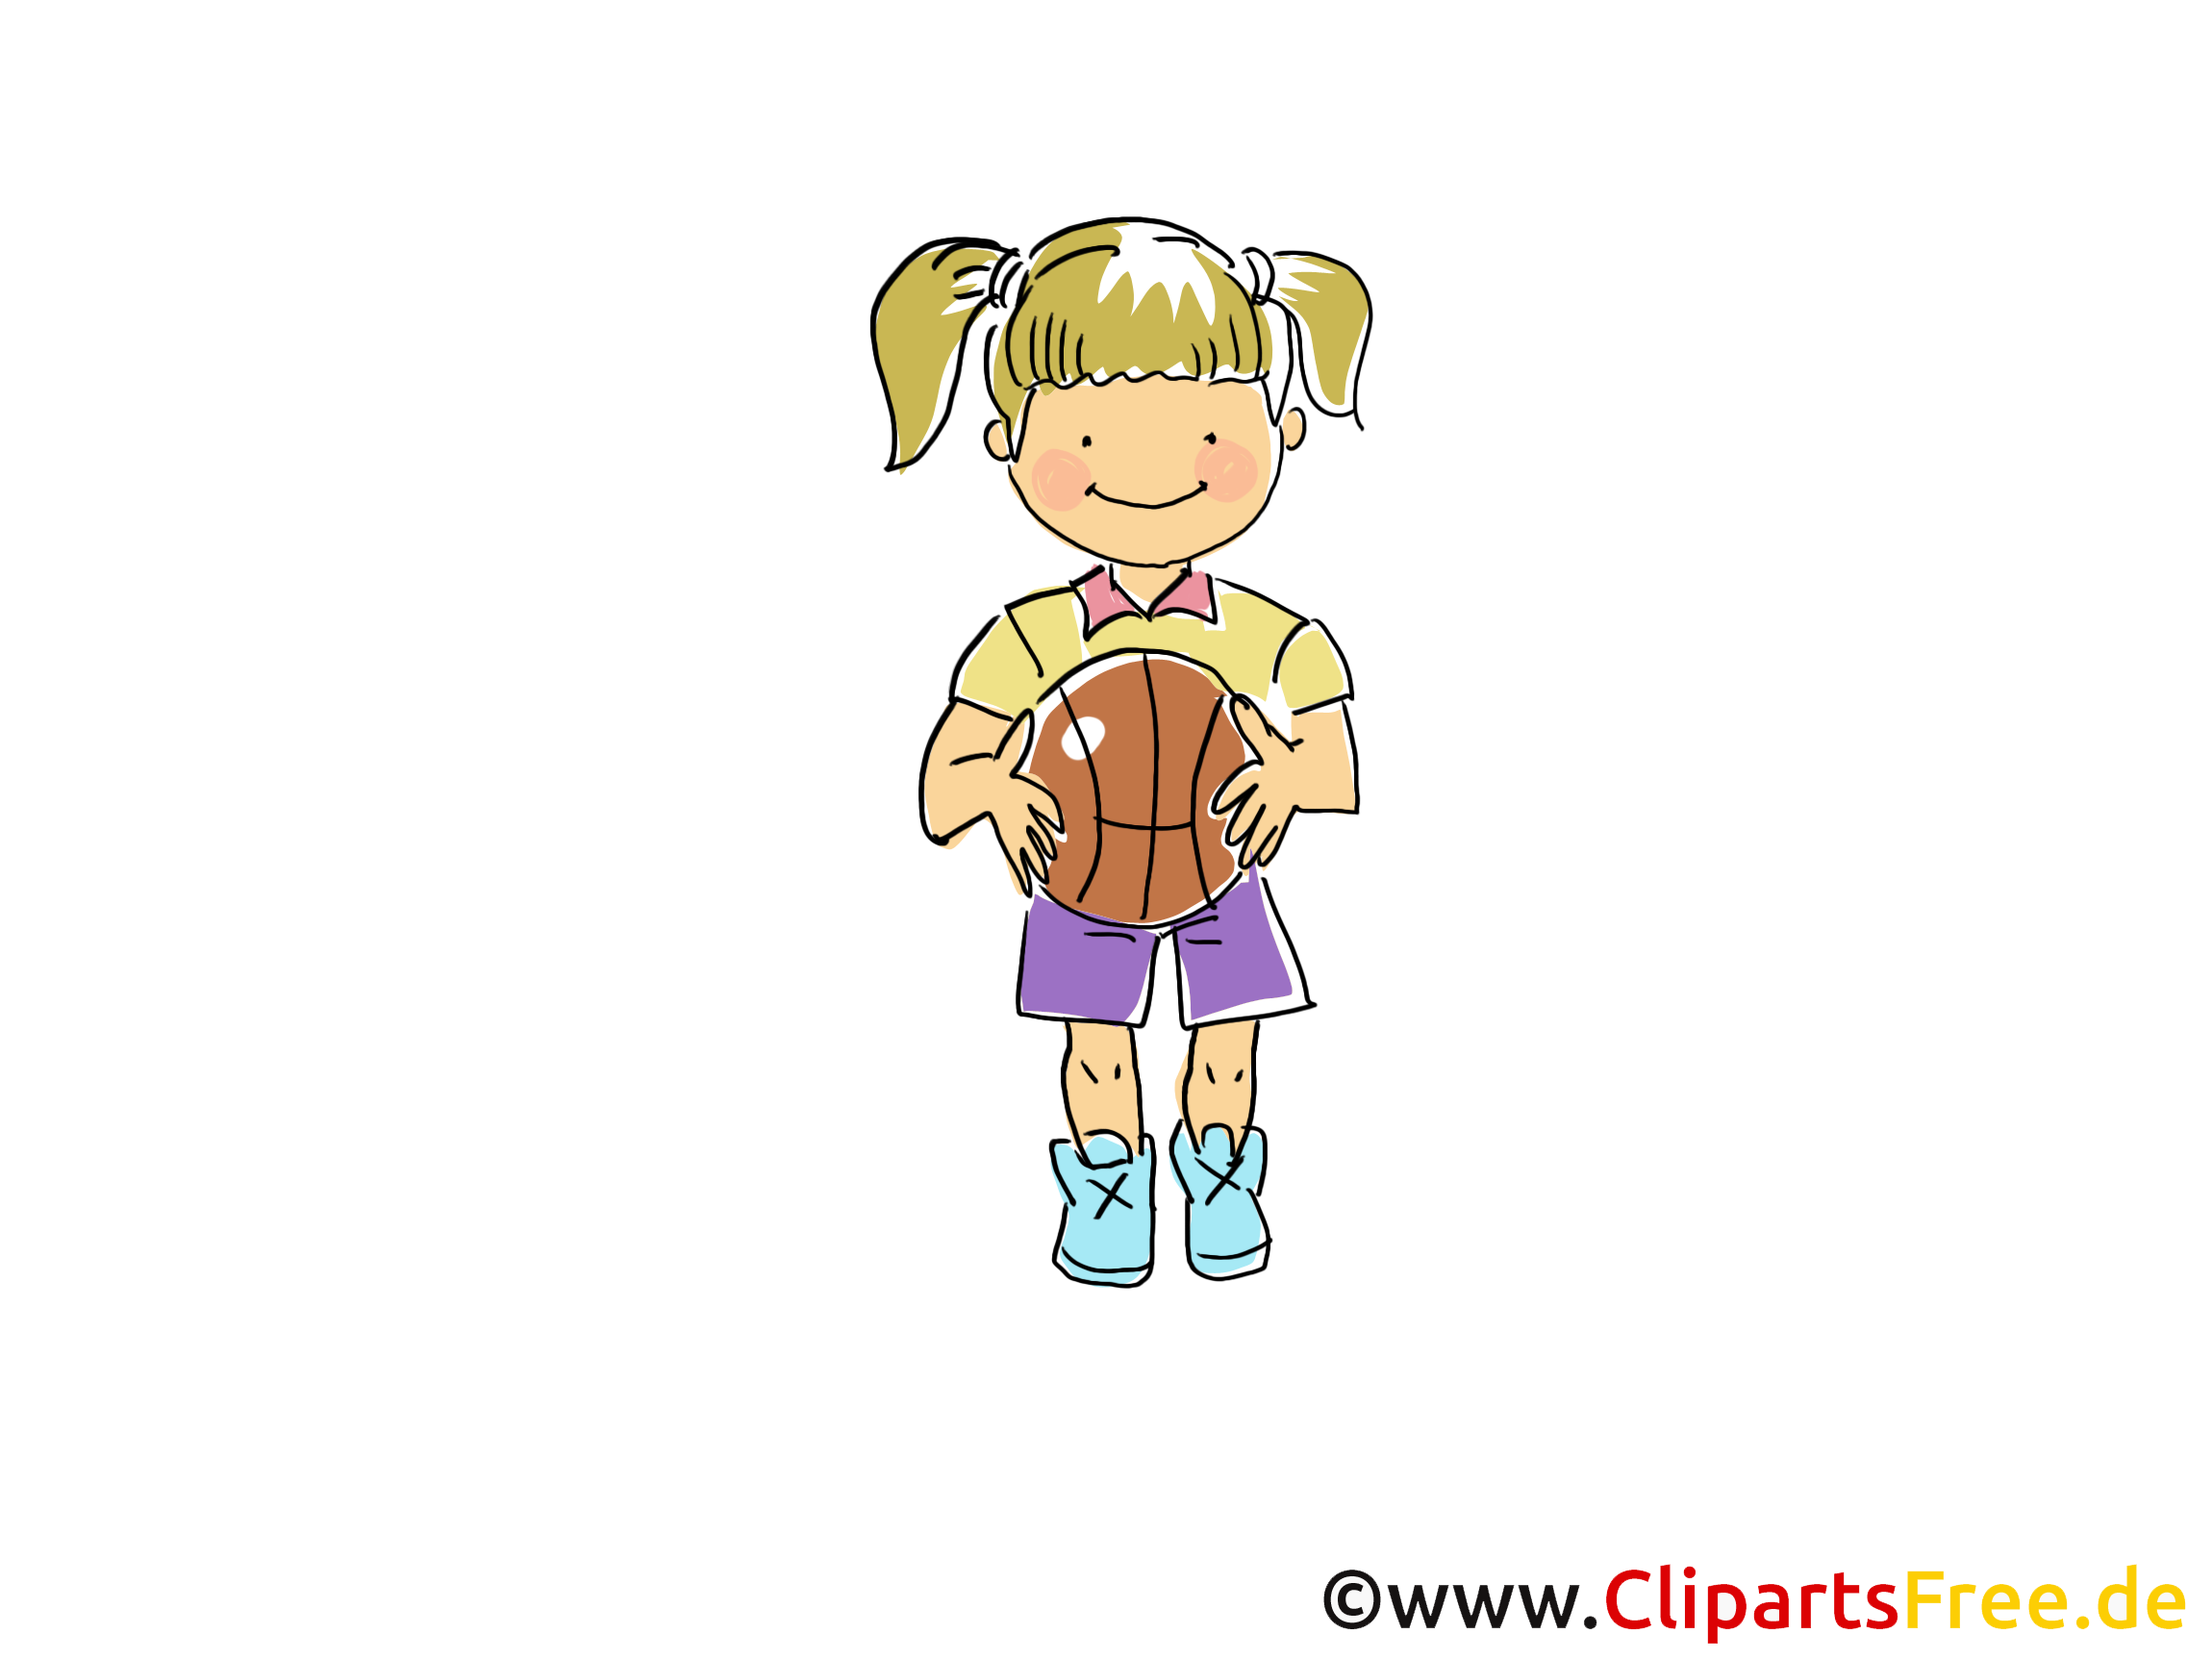 Basket-ball clipart - Fille balle dessins gratuits